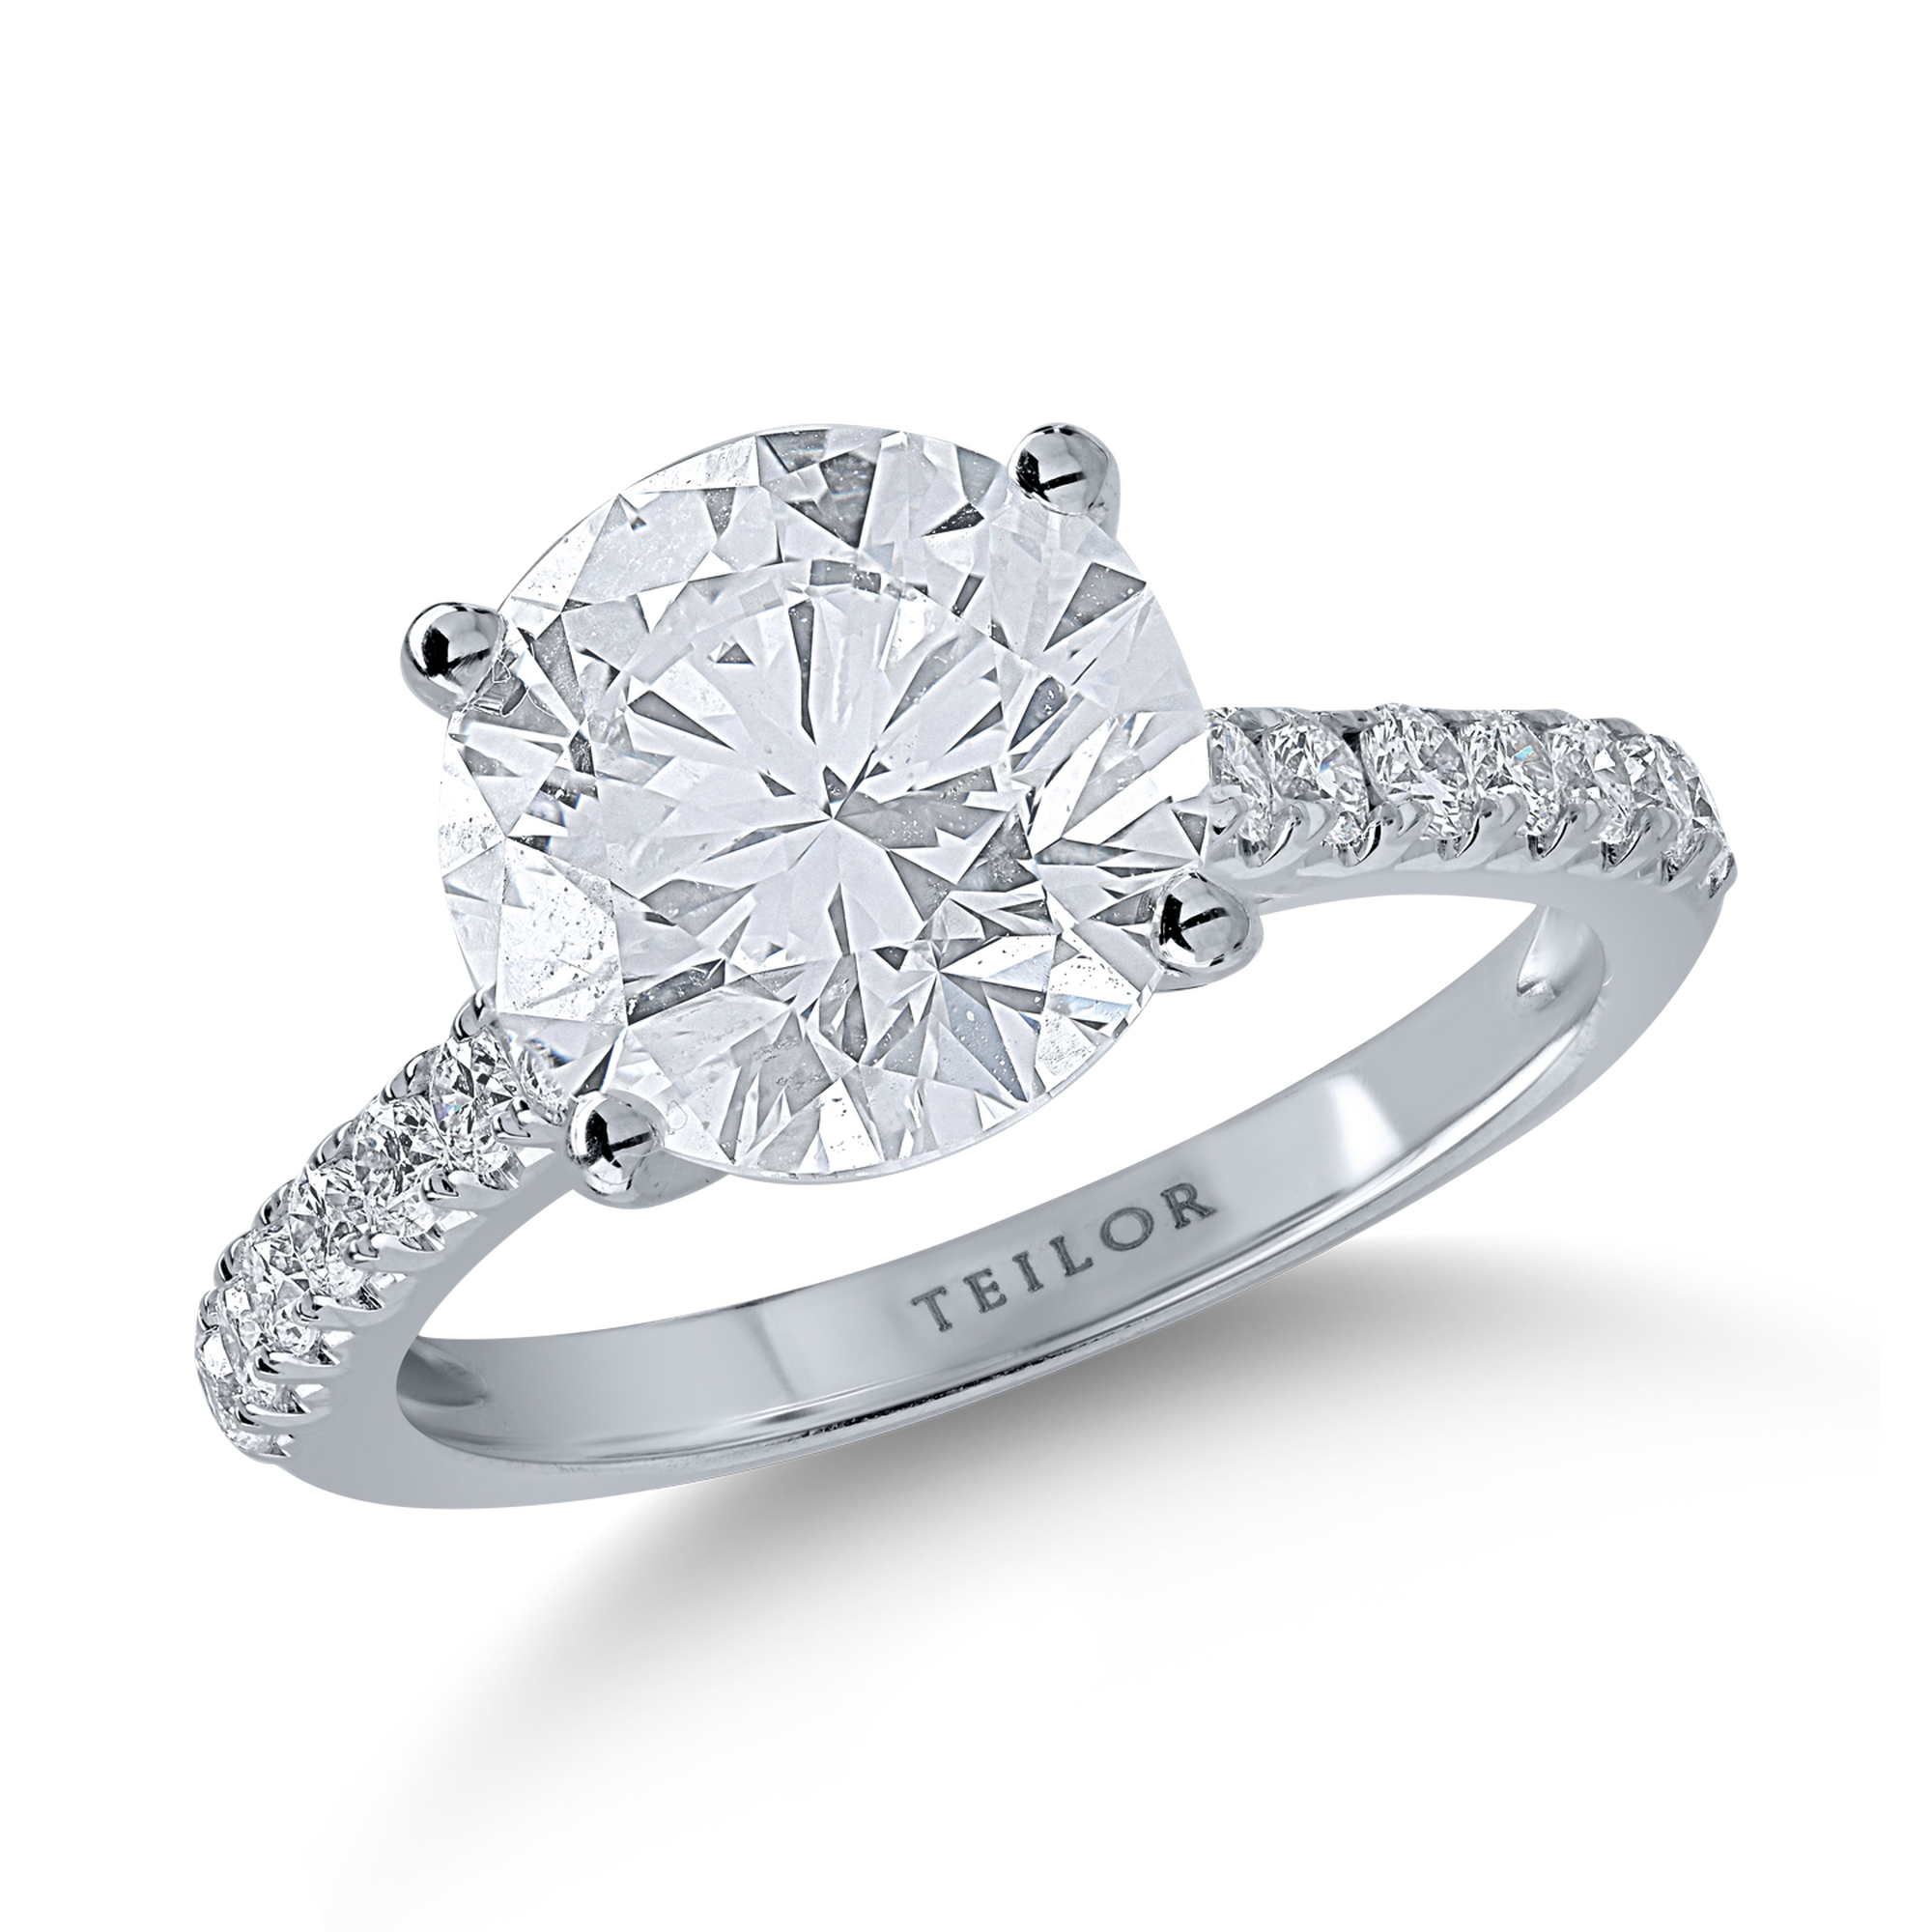 Inel de logodna din aur alb cu un diamant central de 3.6ct si diamante pave de 0.4ct image8